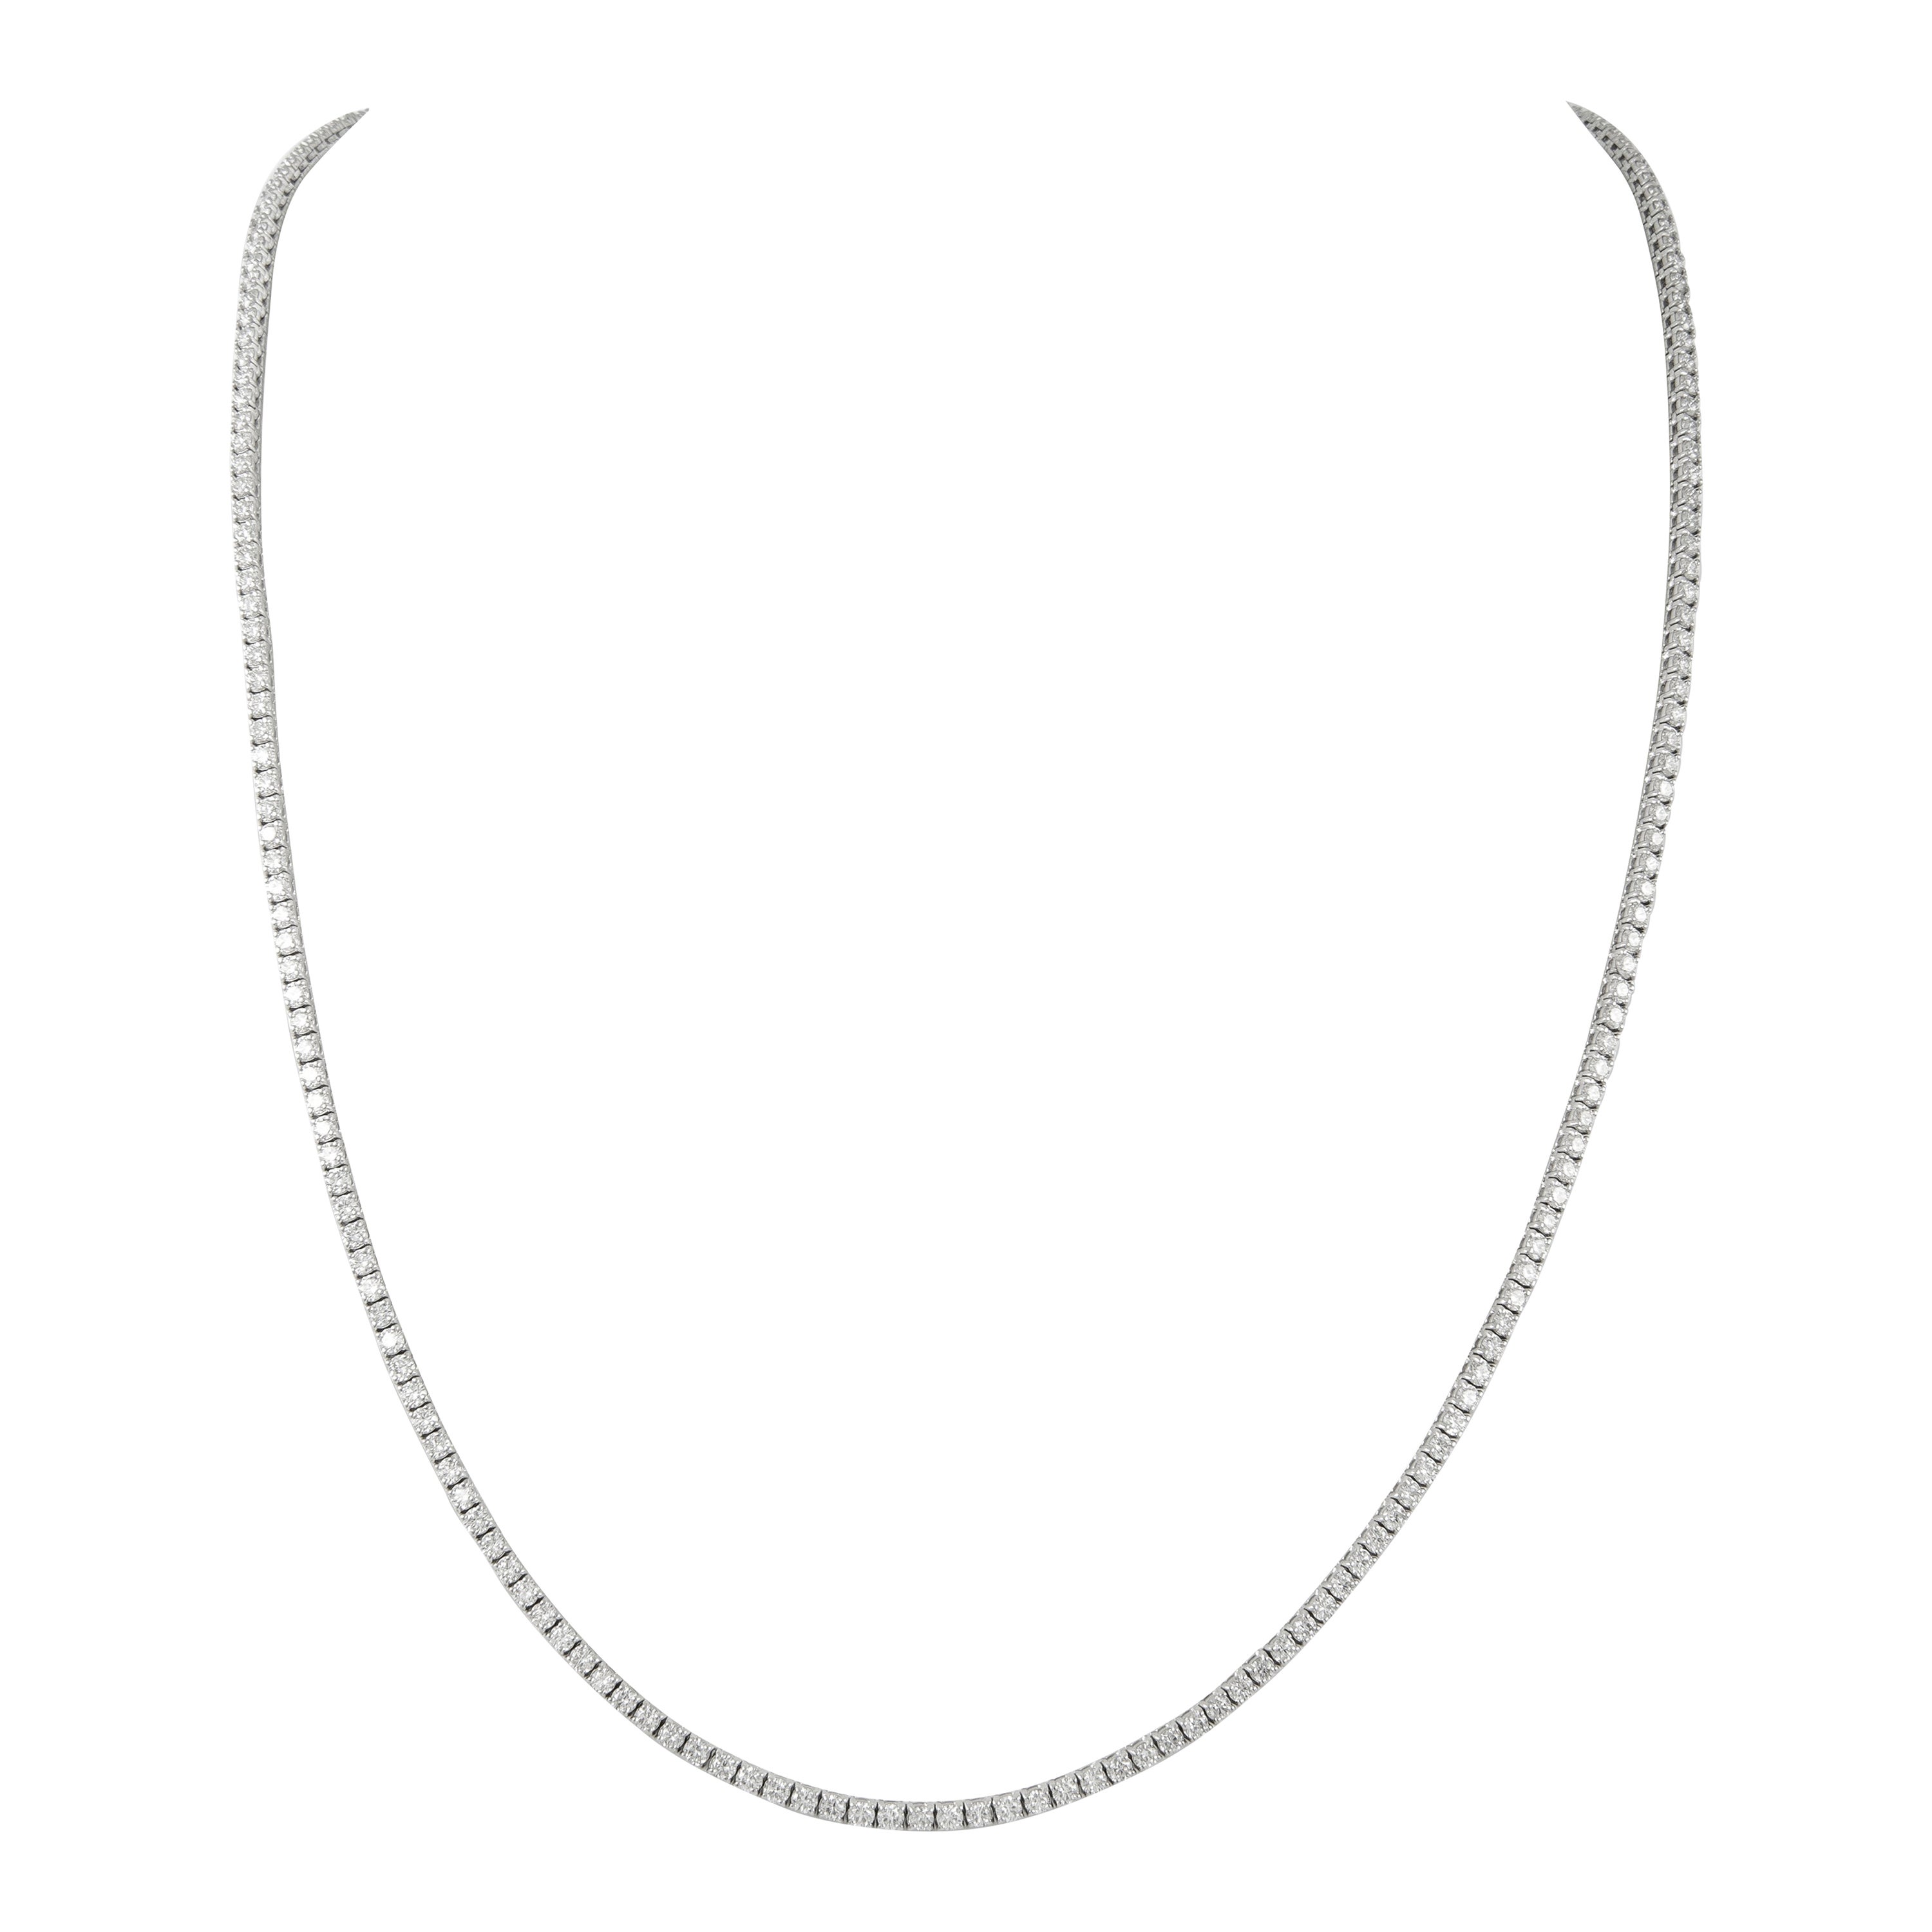 Alexander 16.68 Carat Diamond Tennis Necklace White Gold